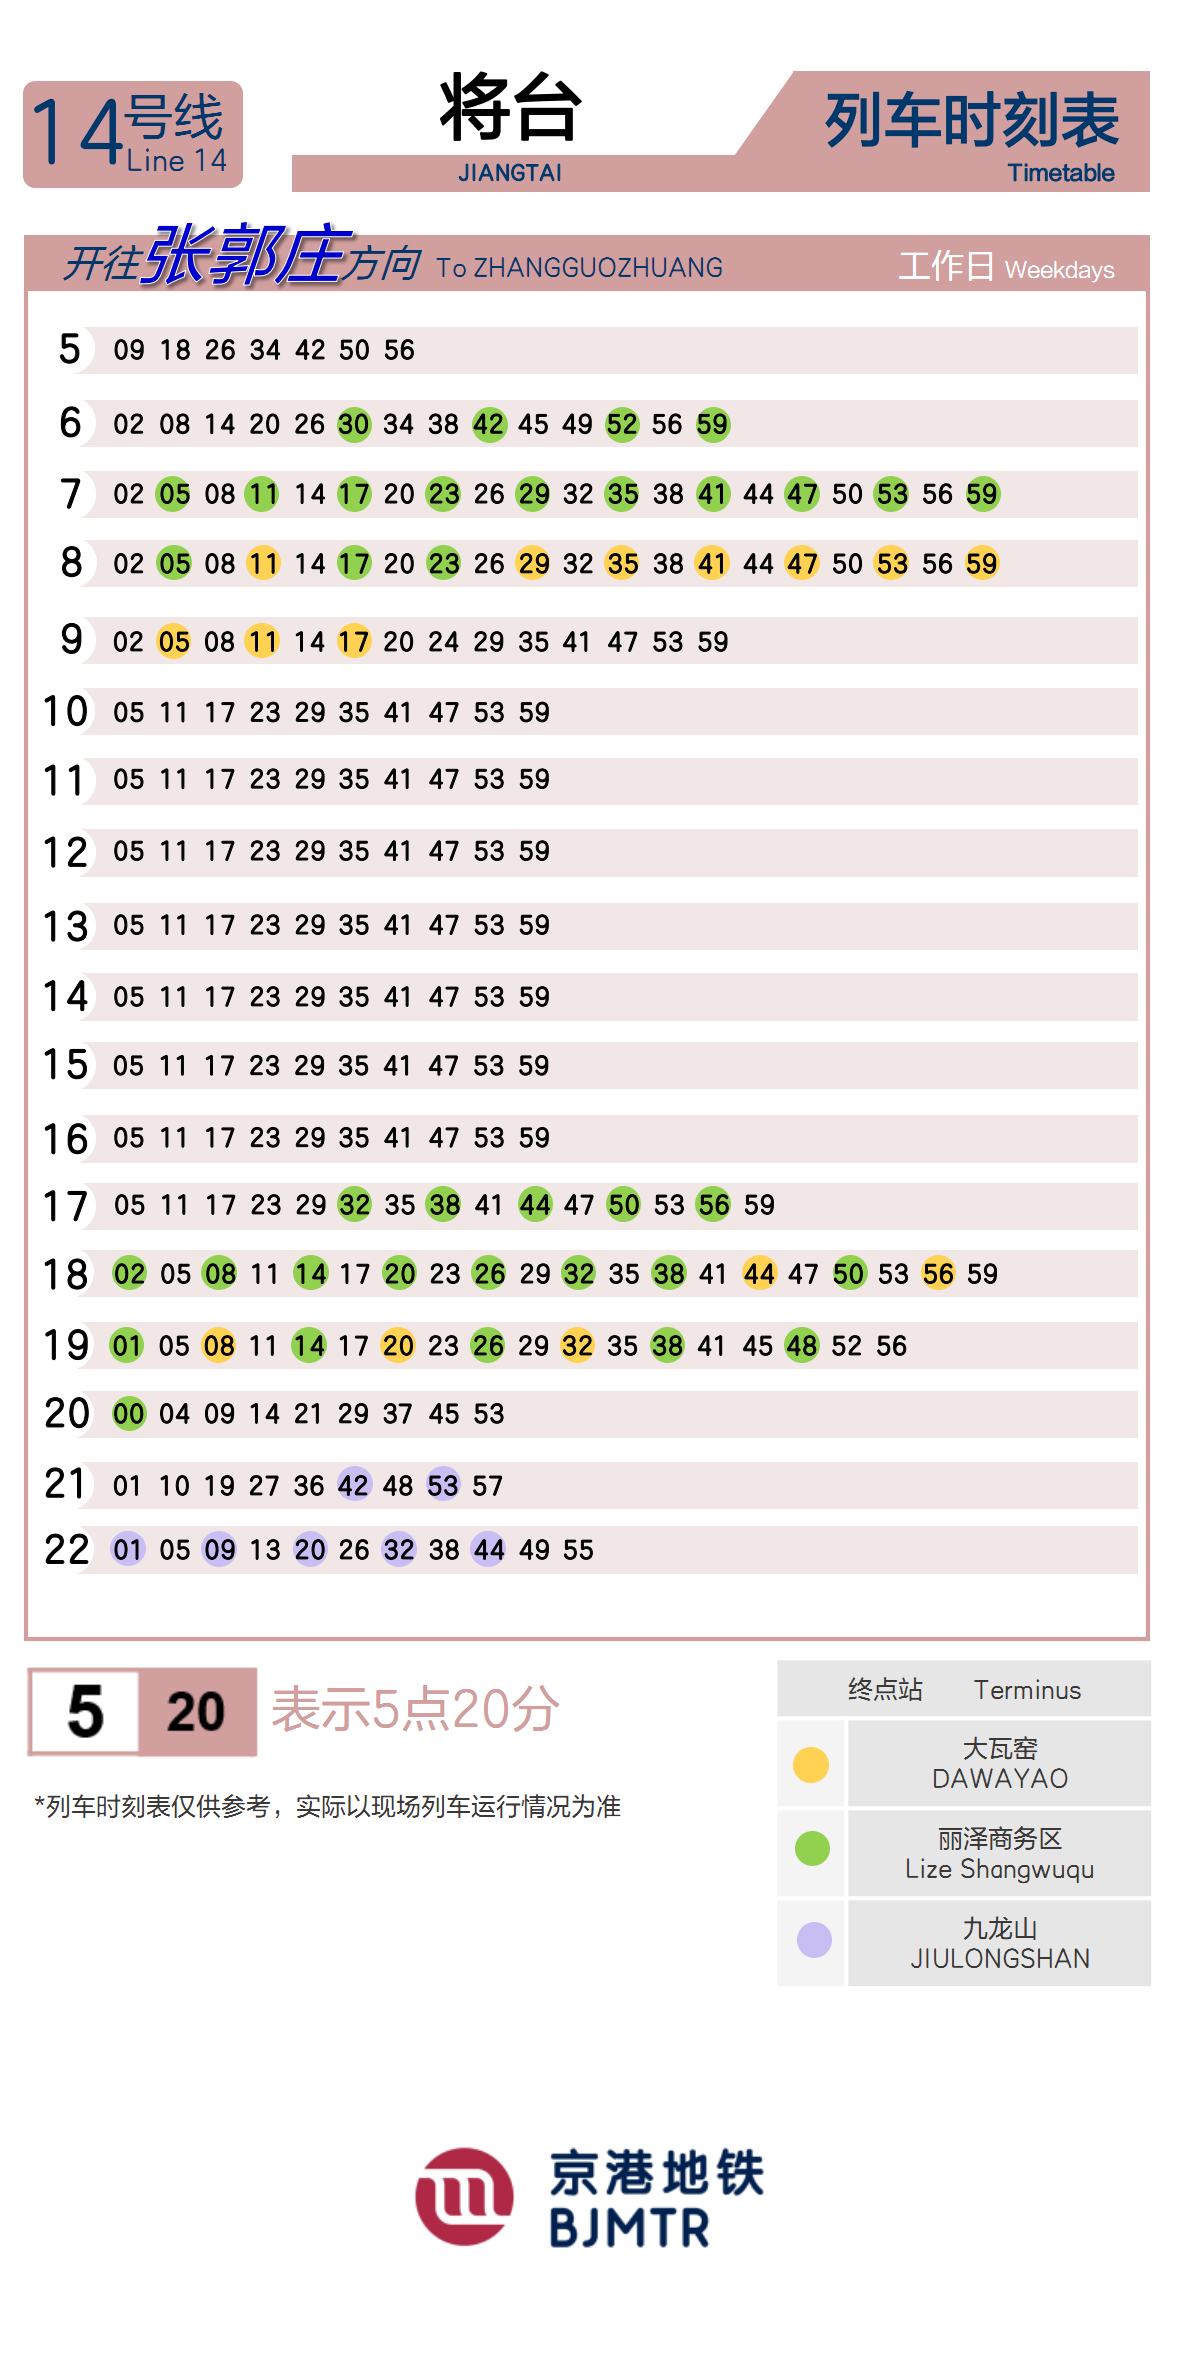 Line 14Jiangtai时刻表